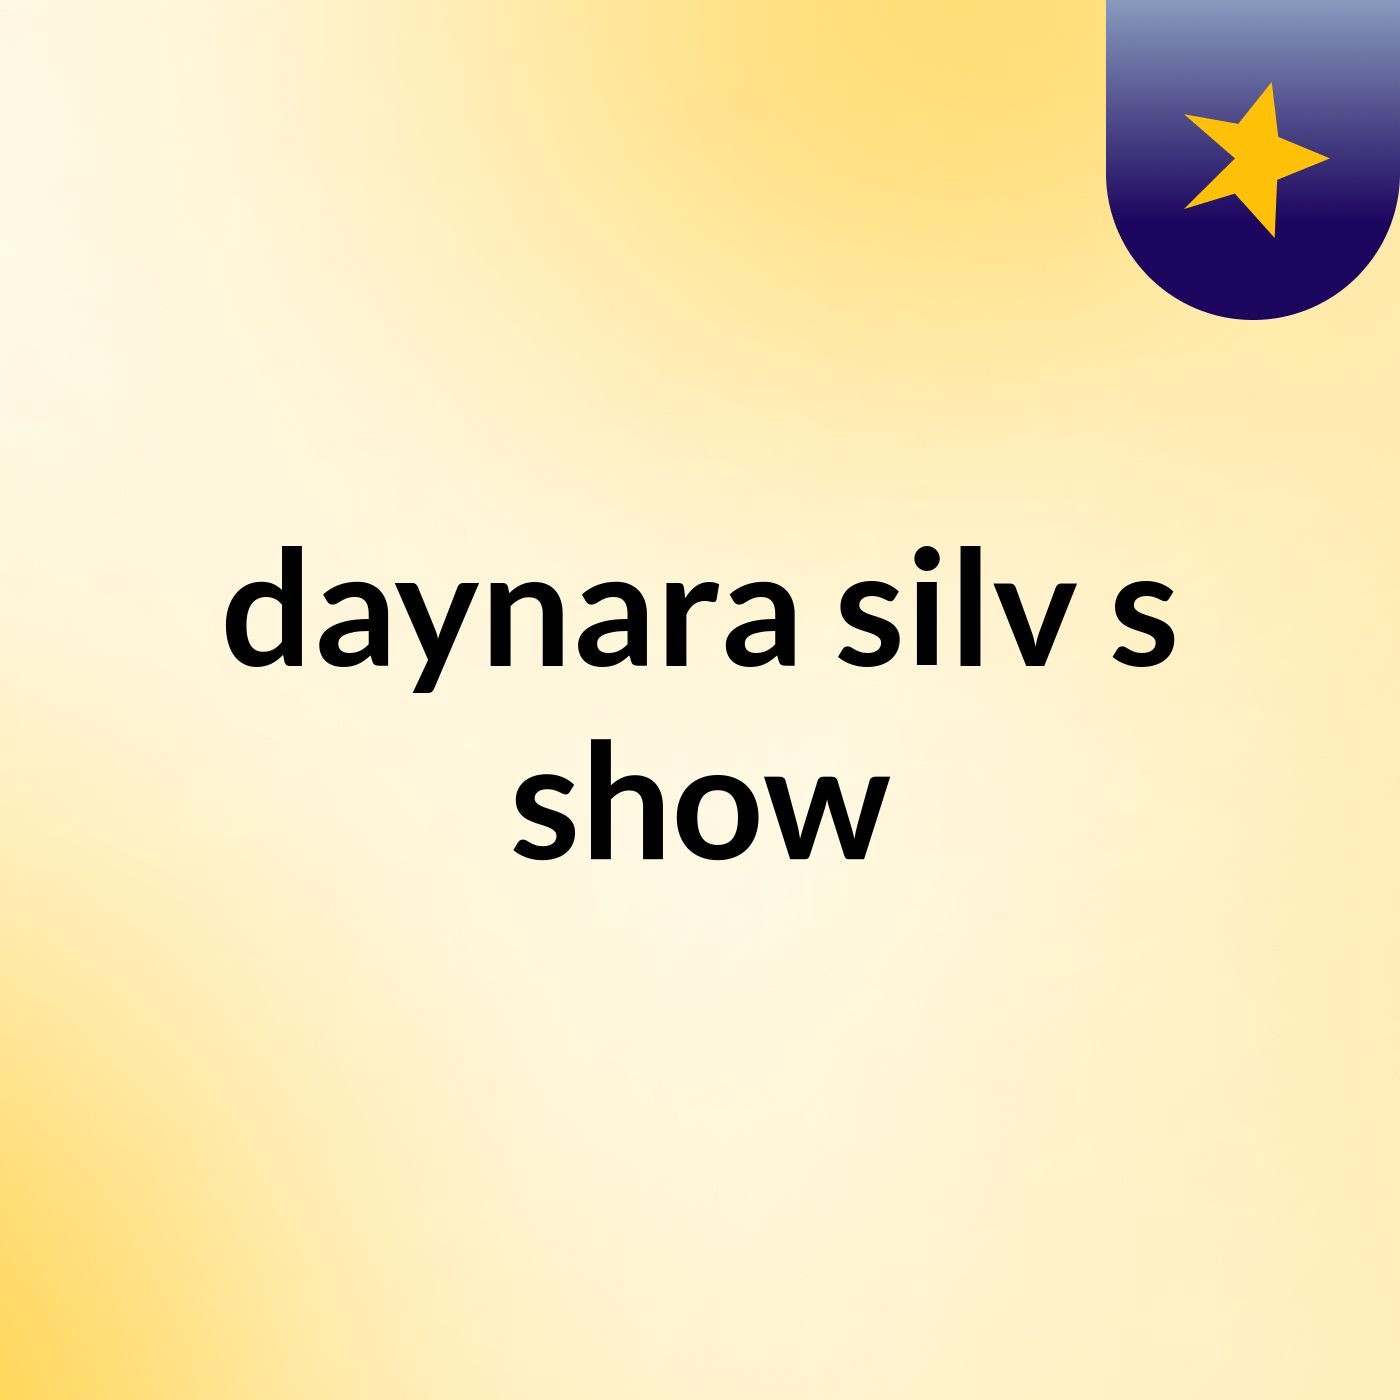 daynara silv's show